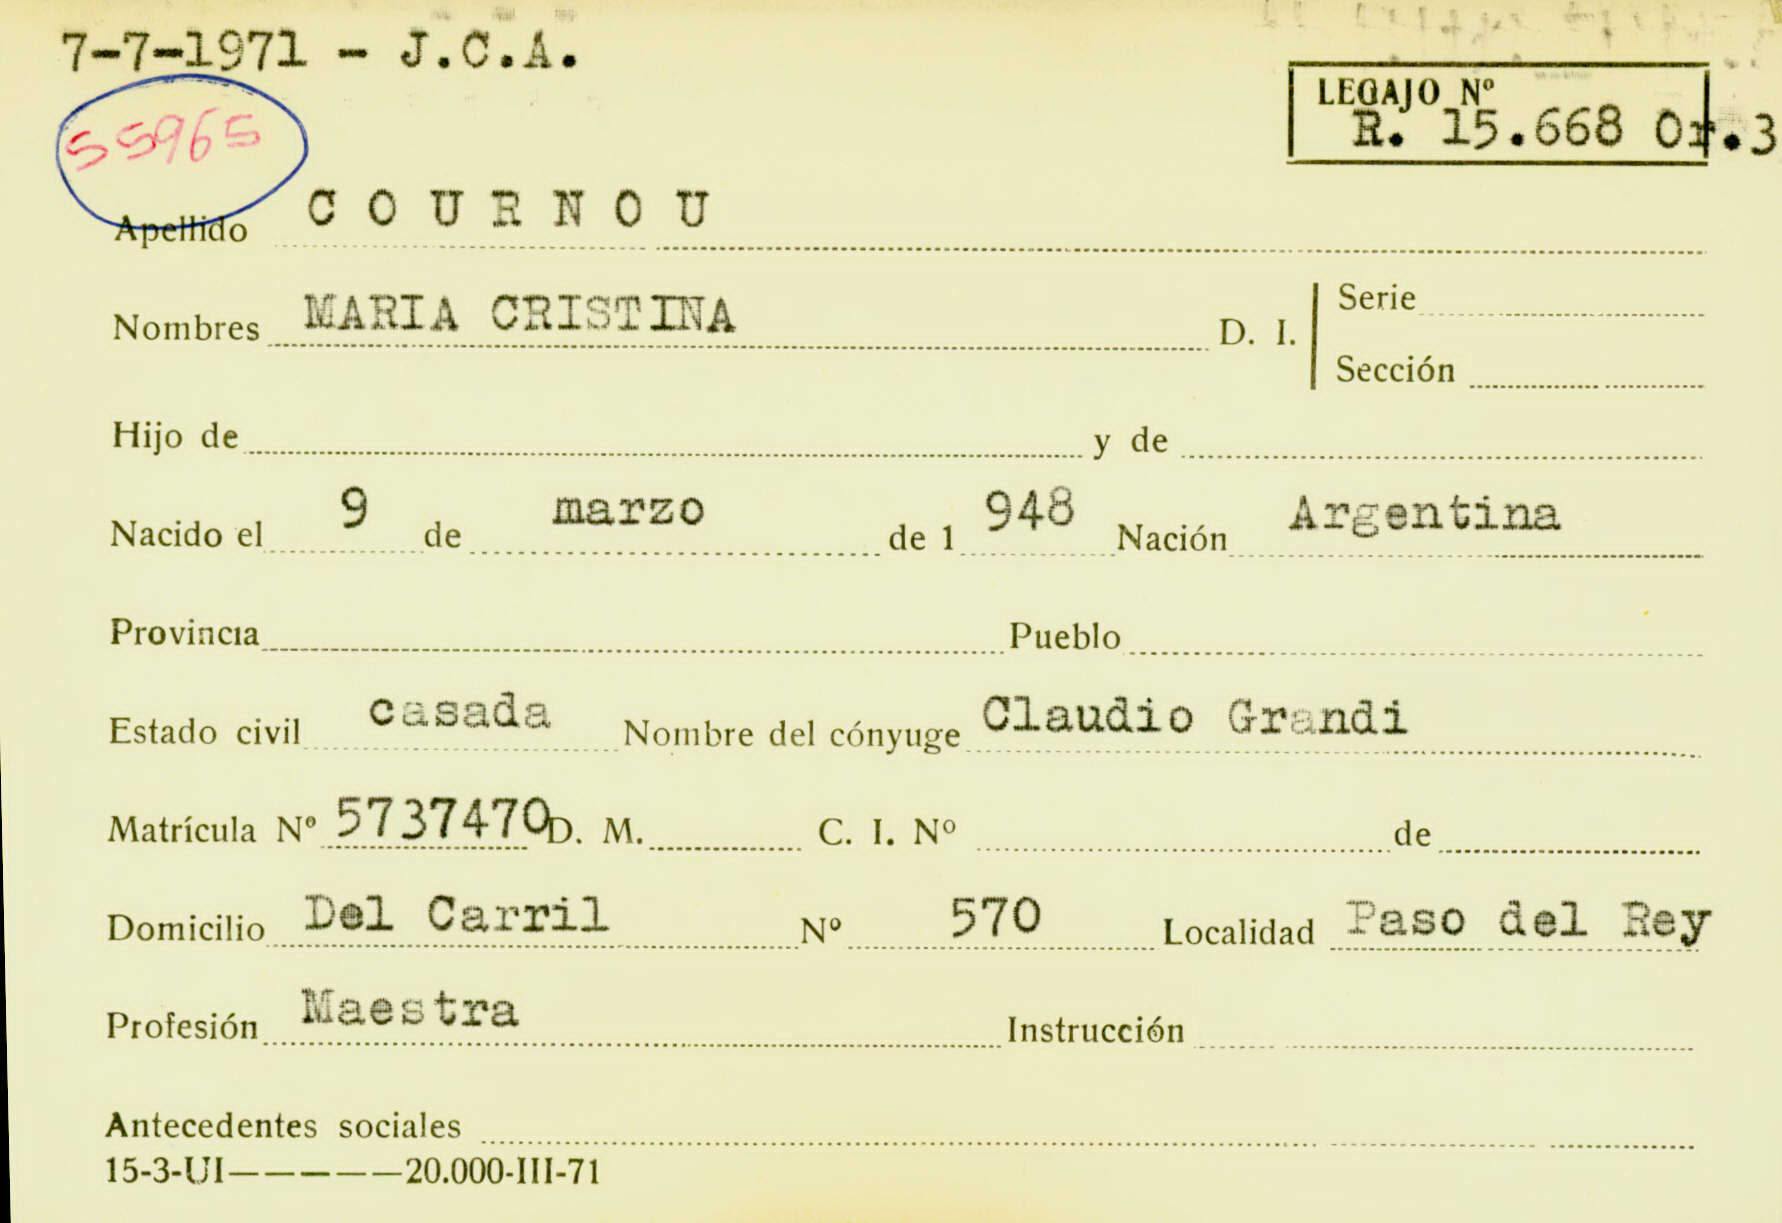 Ficha personal de María Cristina Cournou, que remite al legajo Mesa Referencia 15668–. CPM. Fondo DIPPBA Div. Cen. AyF, Fichero onomástico. 1971. 